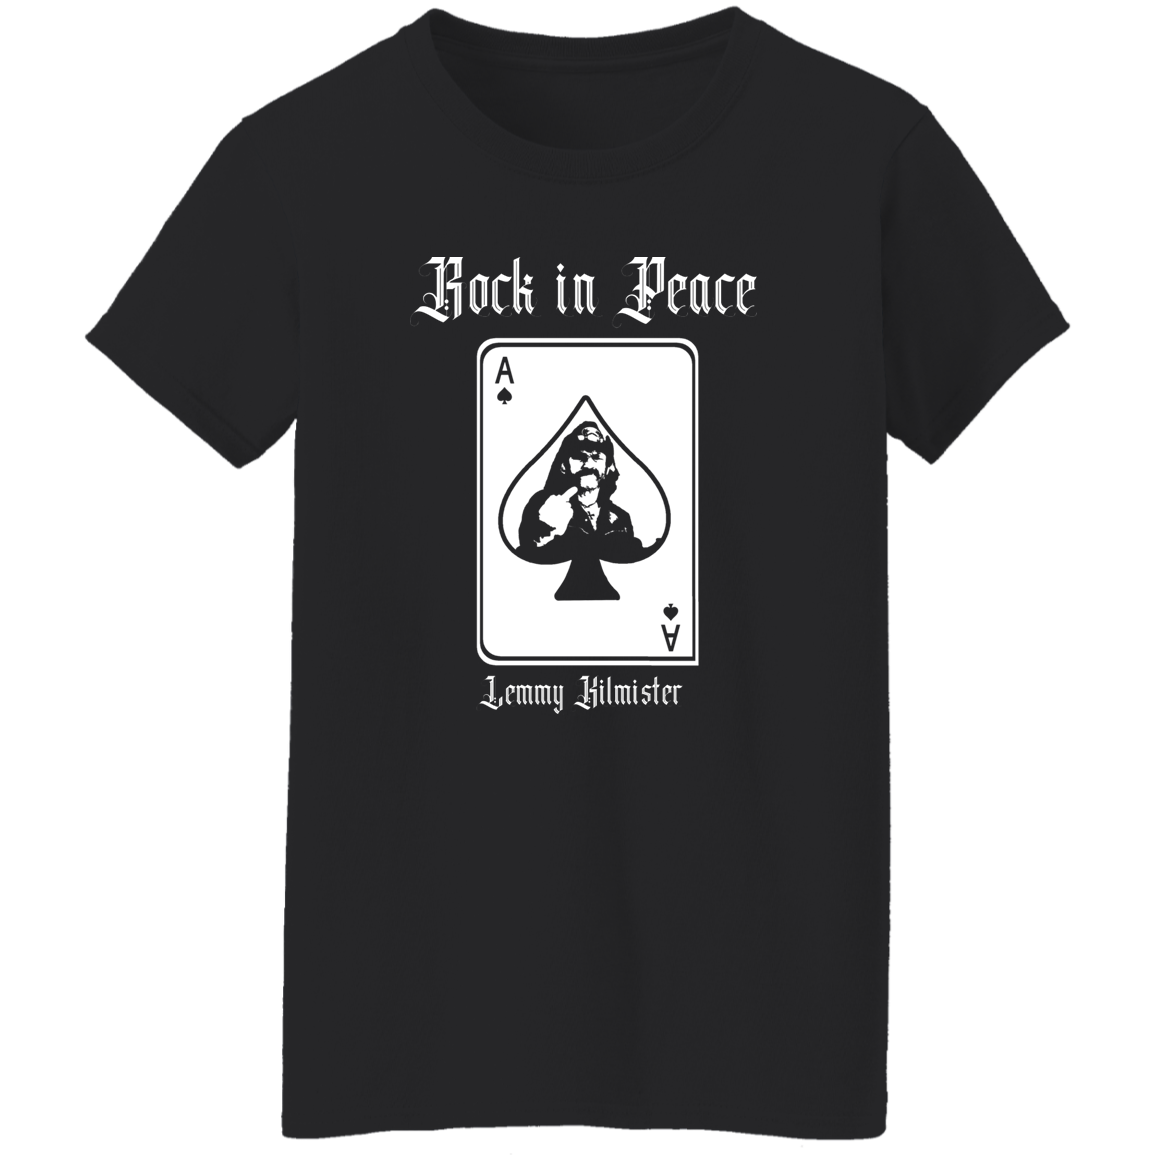 ArtichokeUSA Custom Design. Lemmy Kilmister "Ace of Spades" Tribute Fan Art Version 2 of 2. Ladies' 5.3 oz. T-Shirt